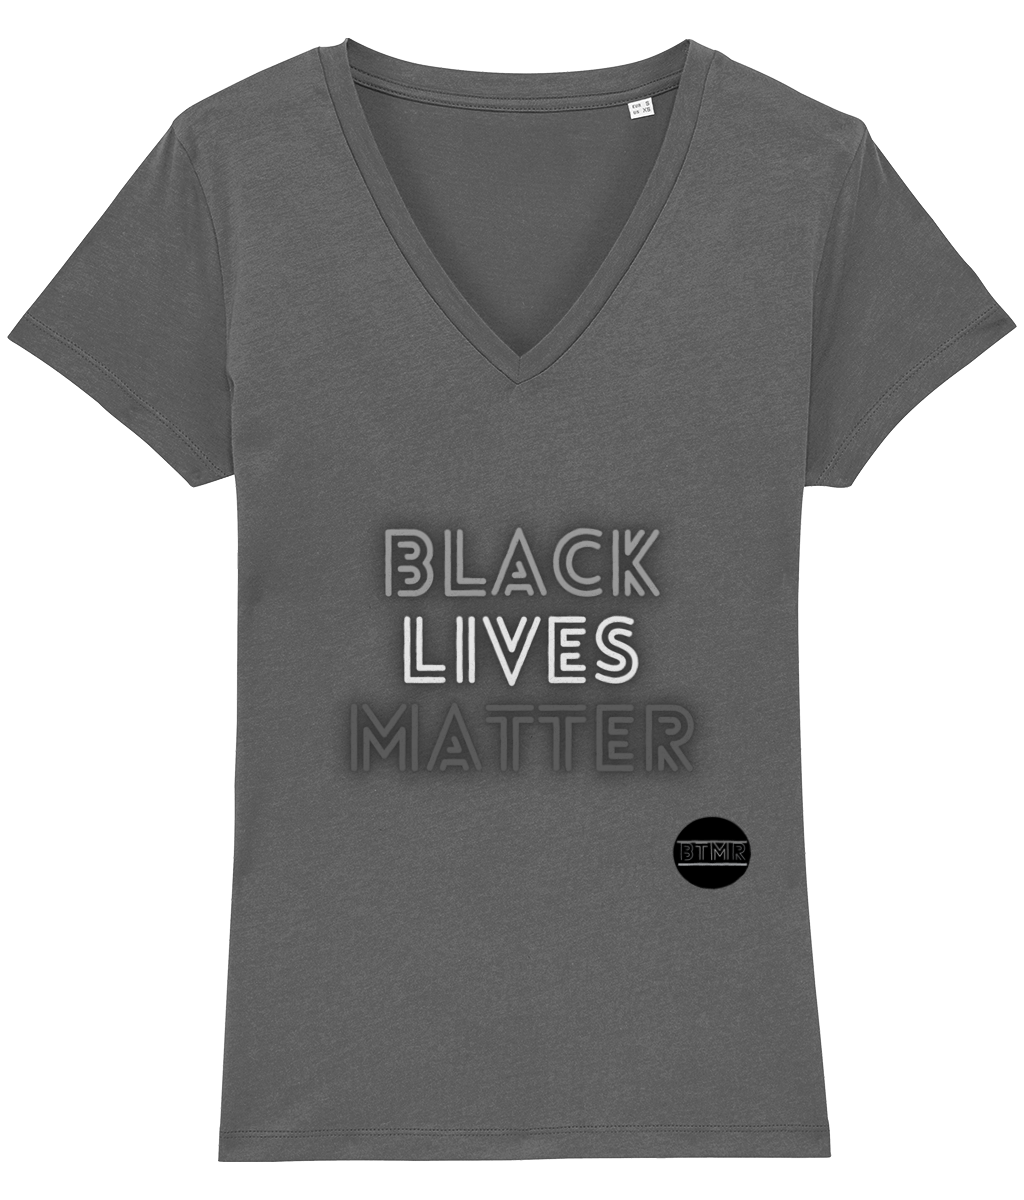 BTMR Black Lives Matter organic V Neck T Shirt